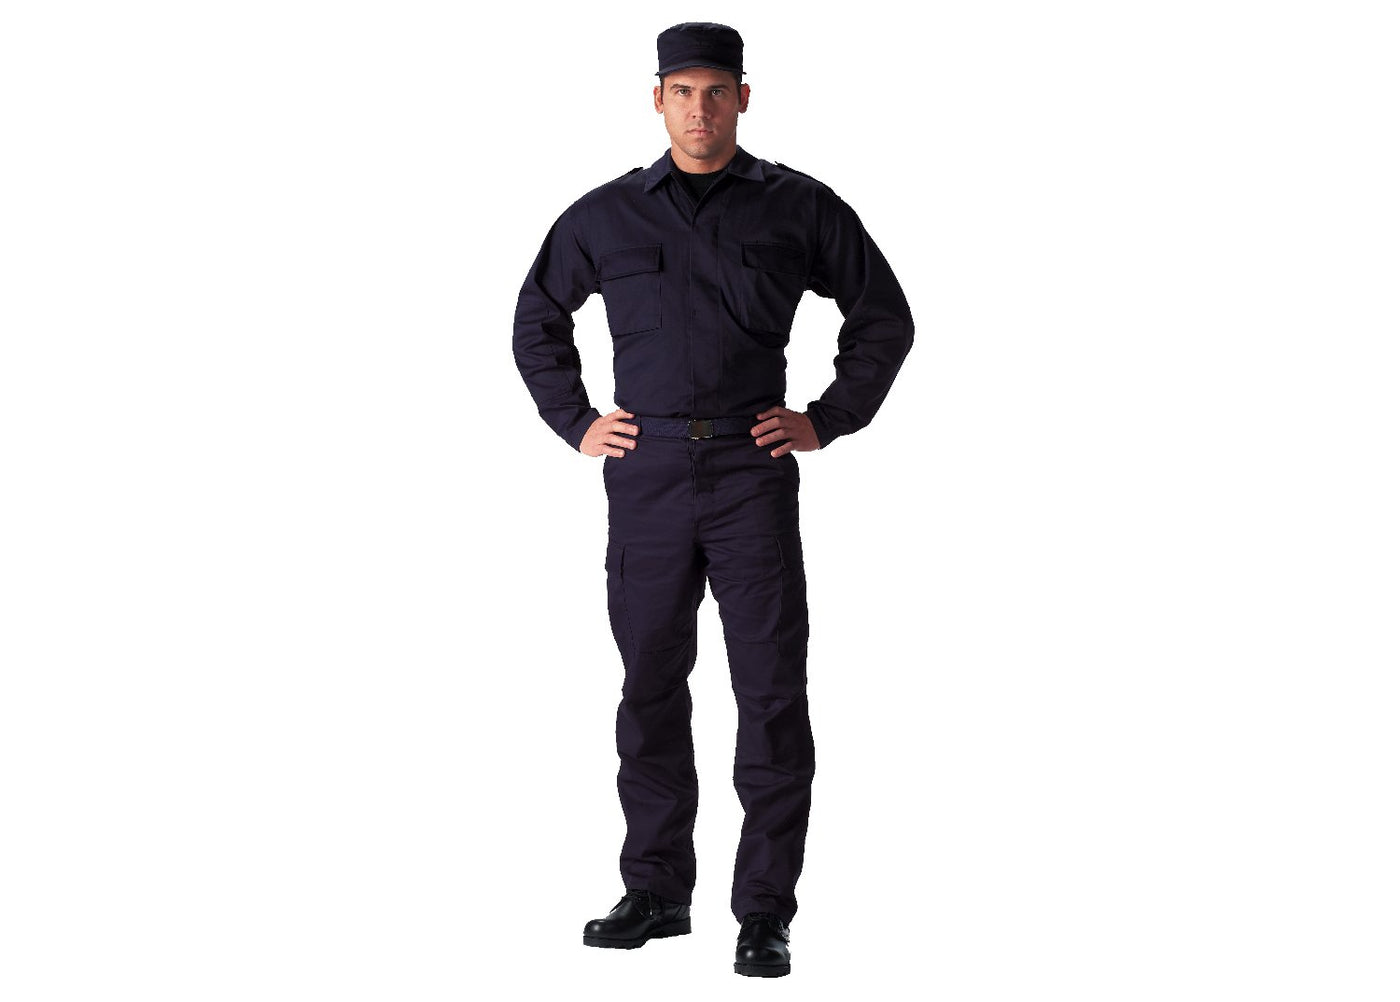 Combat Tactical Pants - BDU (Battle Dress Uniform) - Rothco